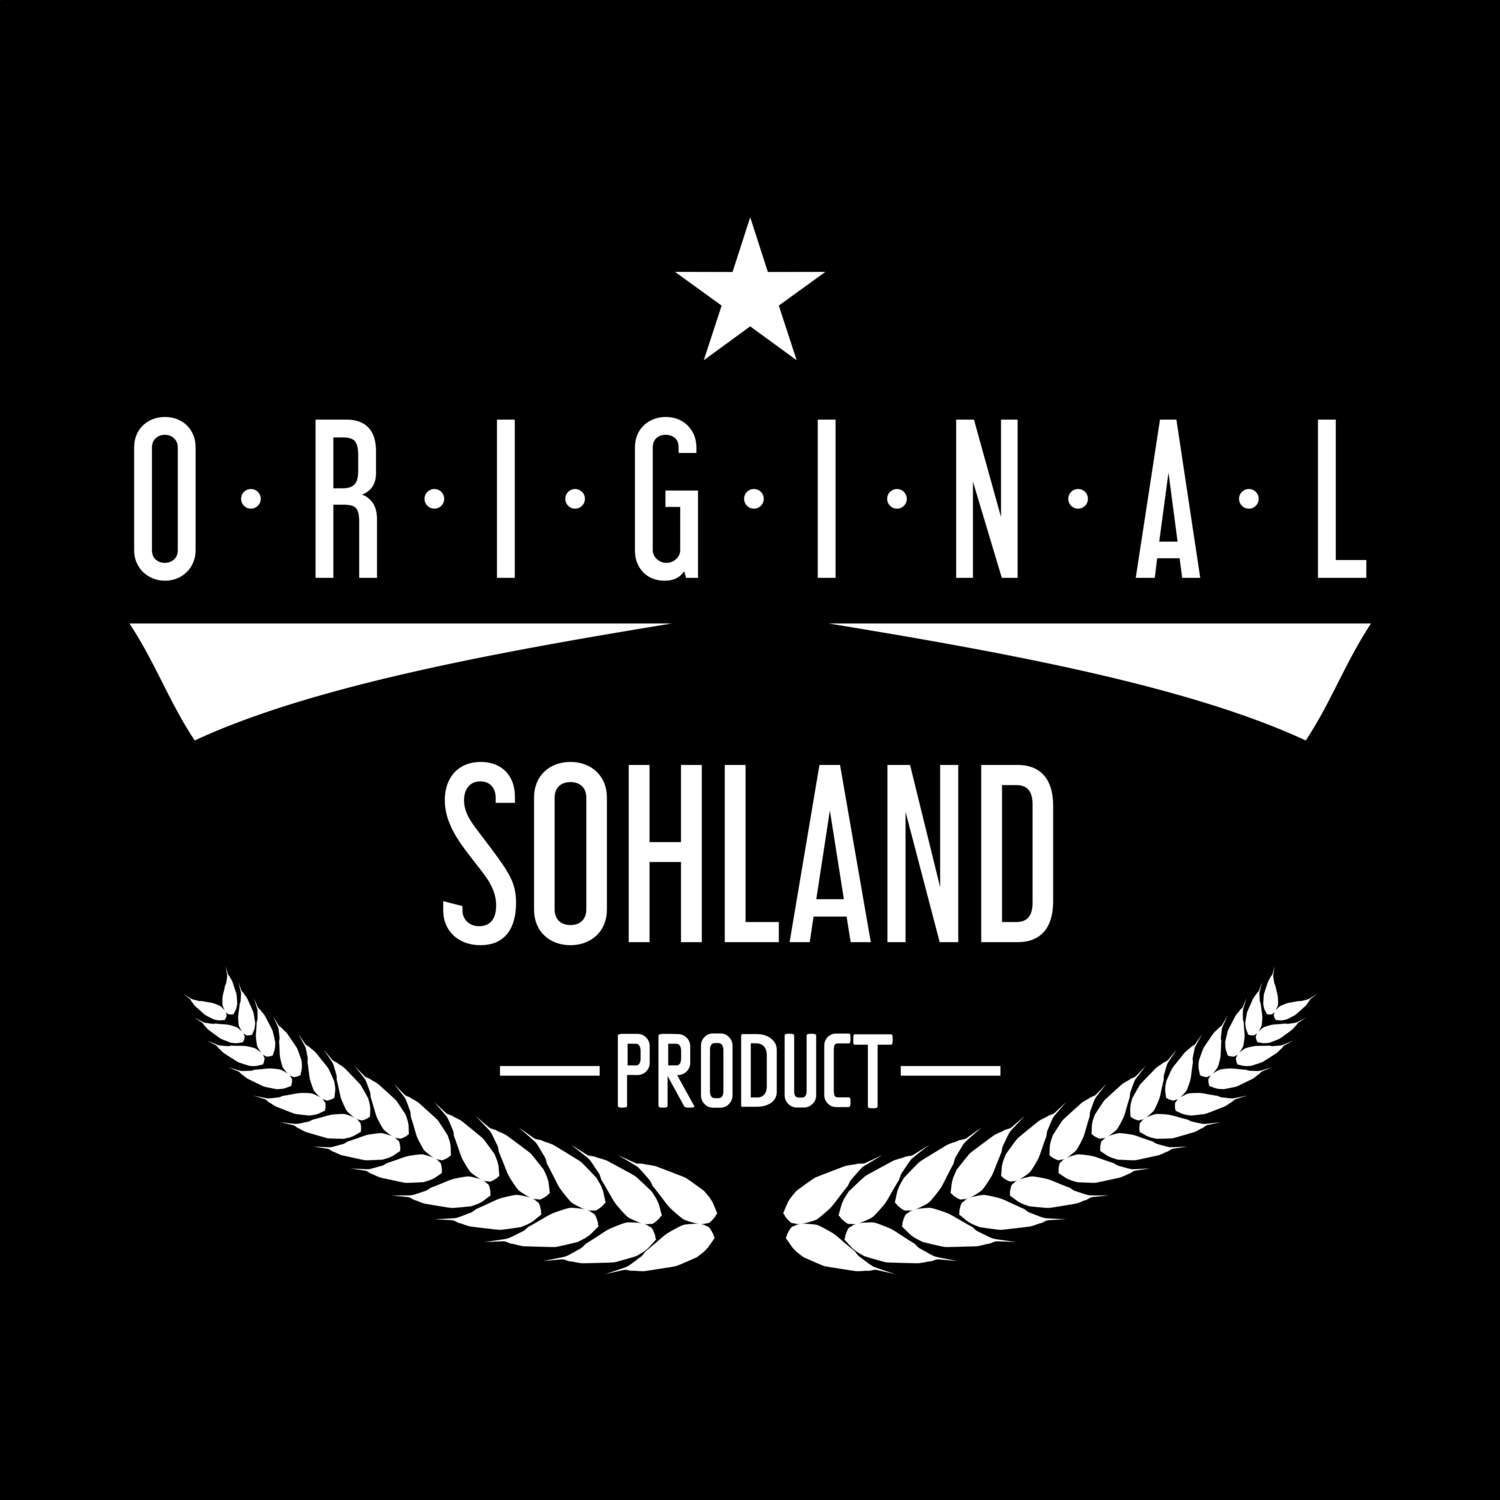 Sohland T-Shirt »Original Product«